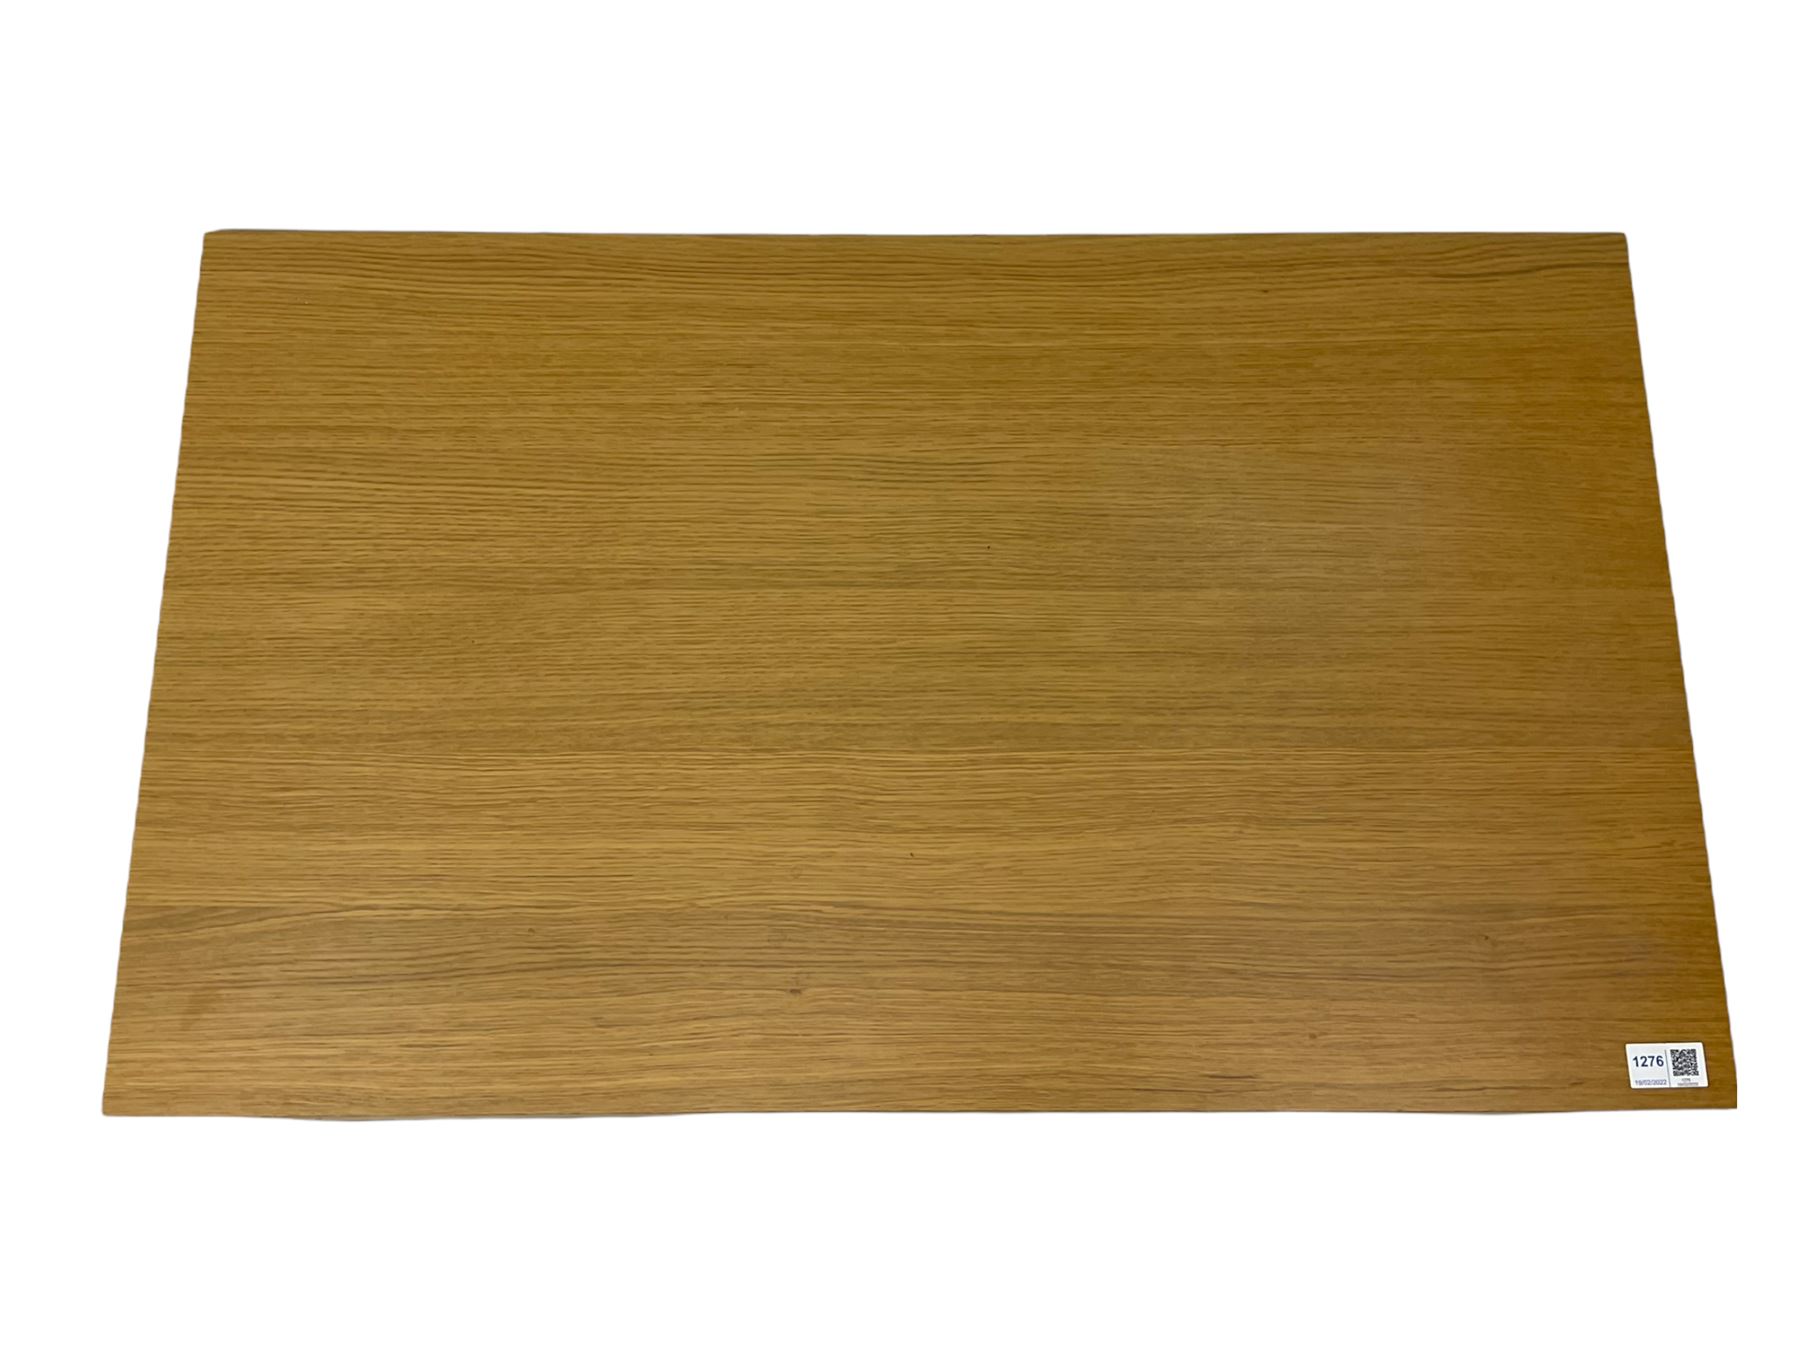 Ikea light oak three drawer chest - Image 6 of 6